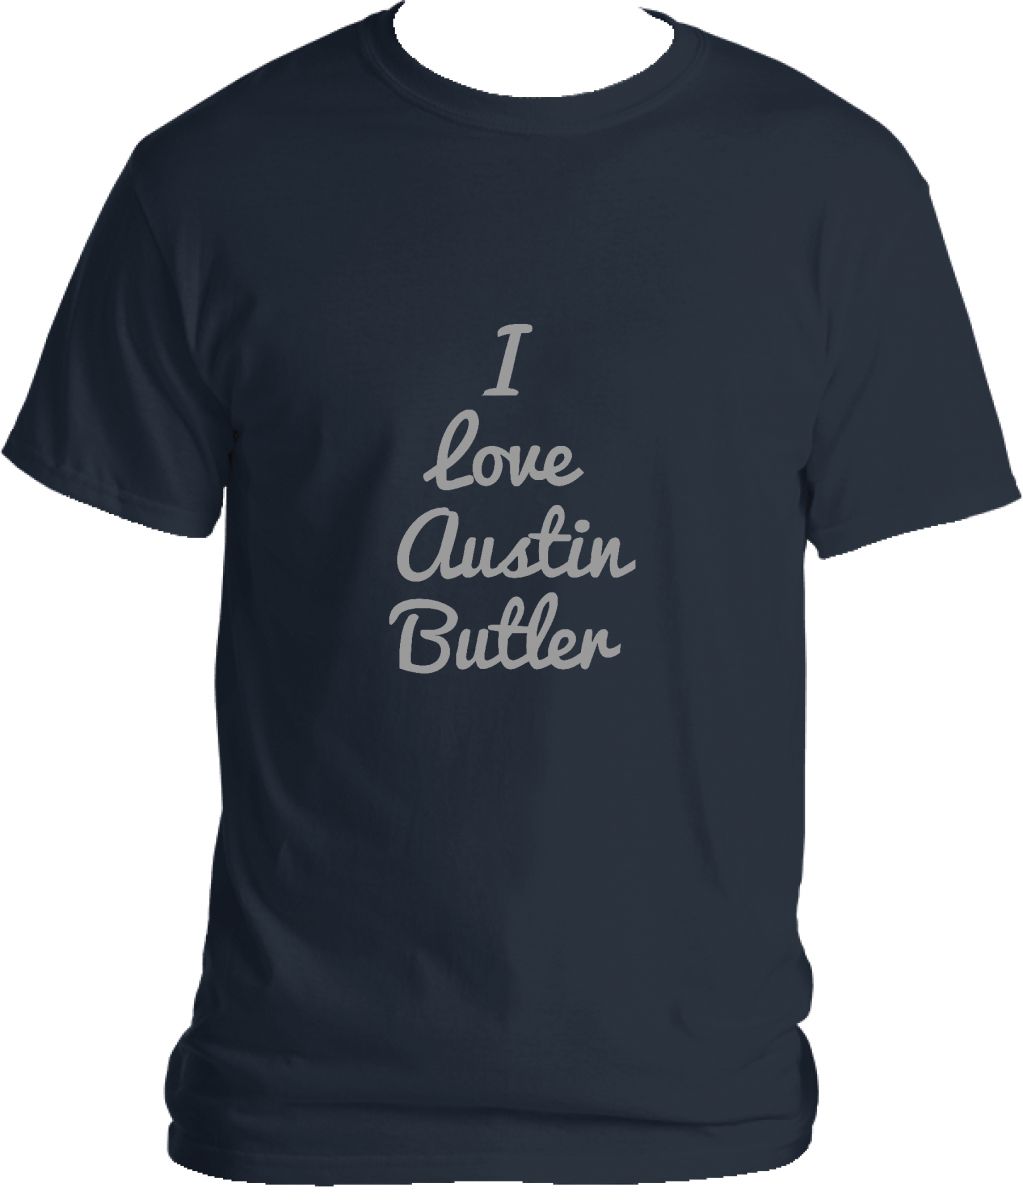 I Love Austin Butler Shirt (navy blue)